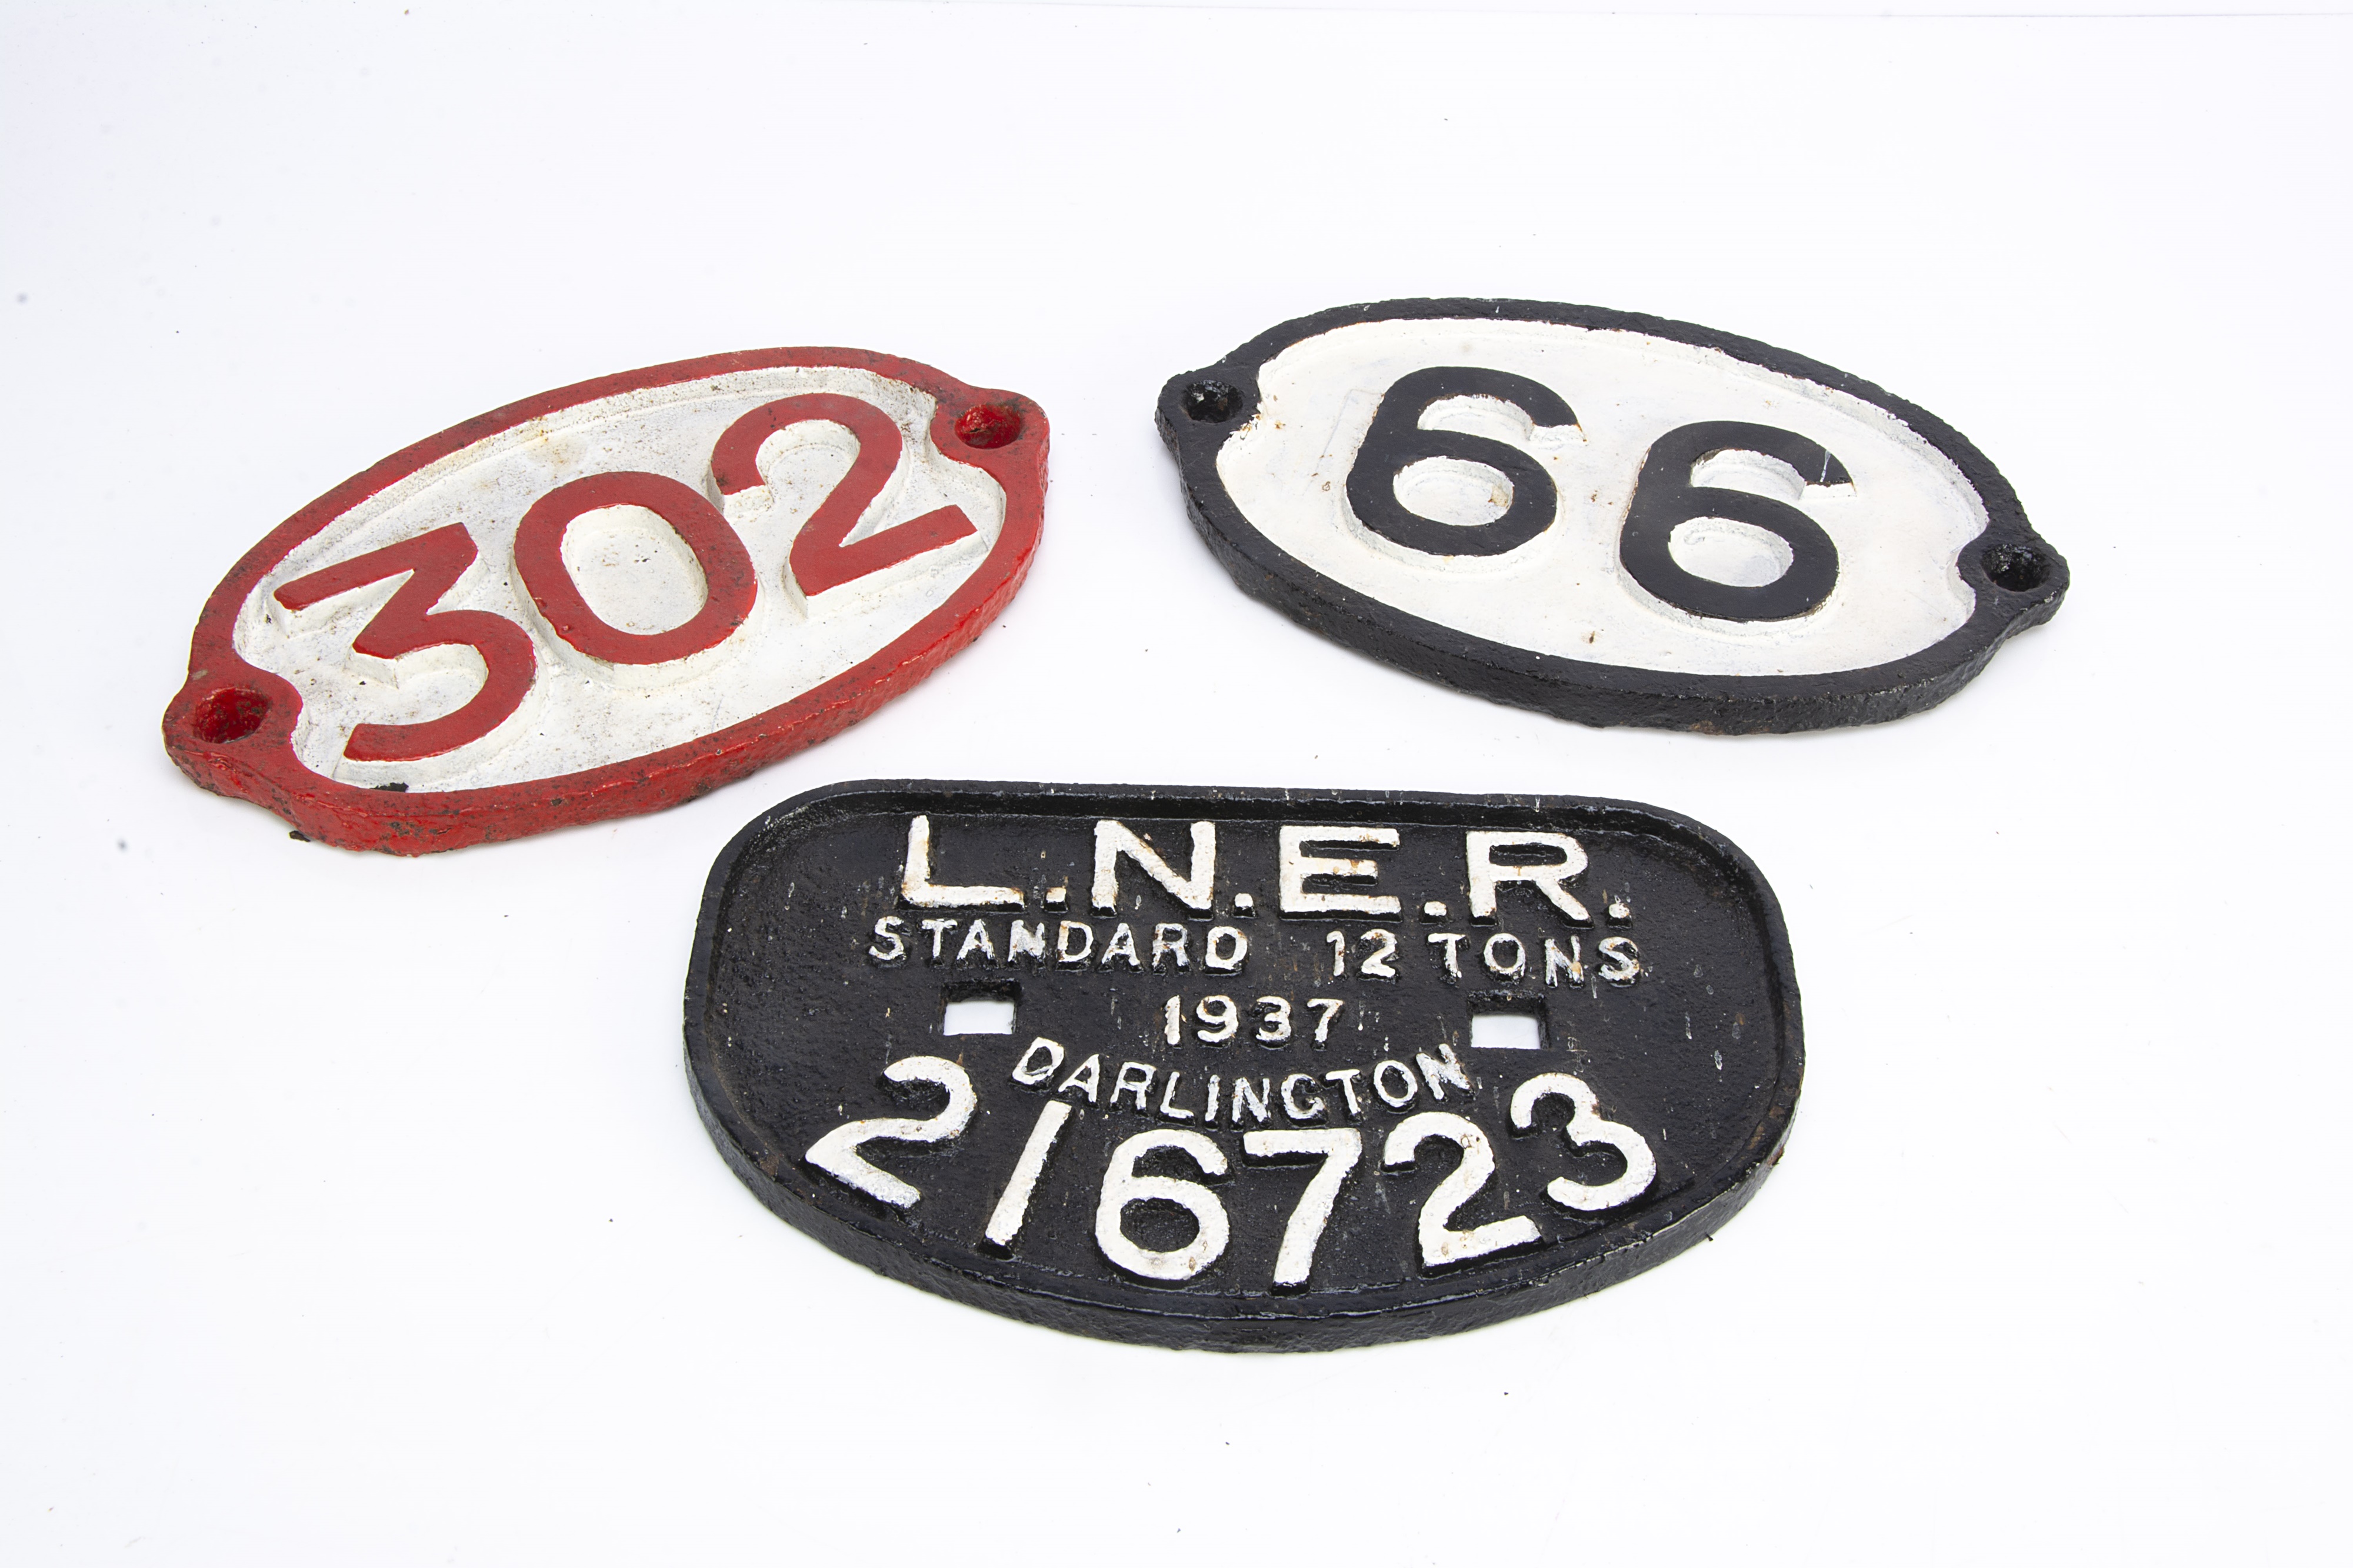 LNER Wagon Plate and Bridge Plates